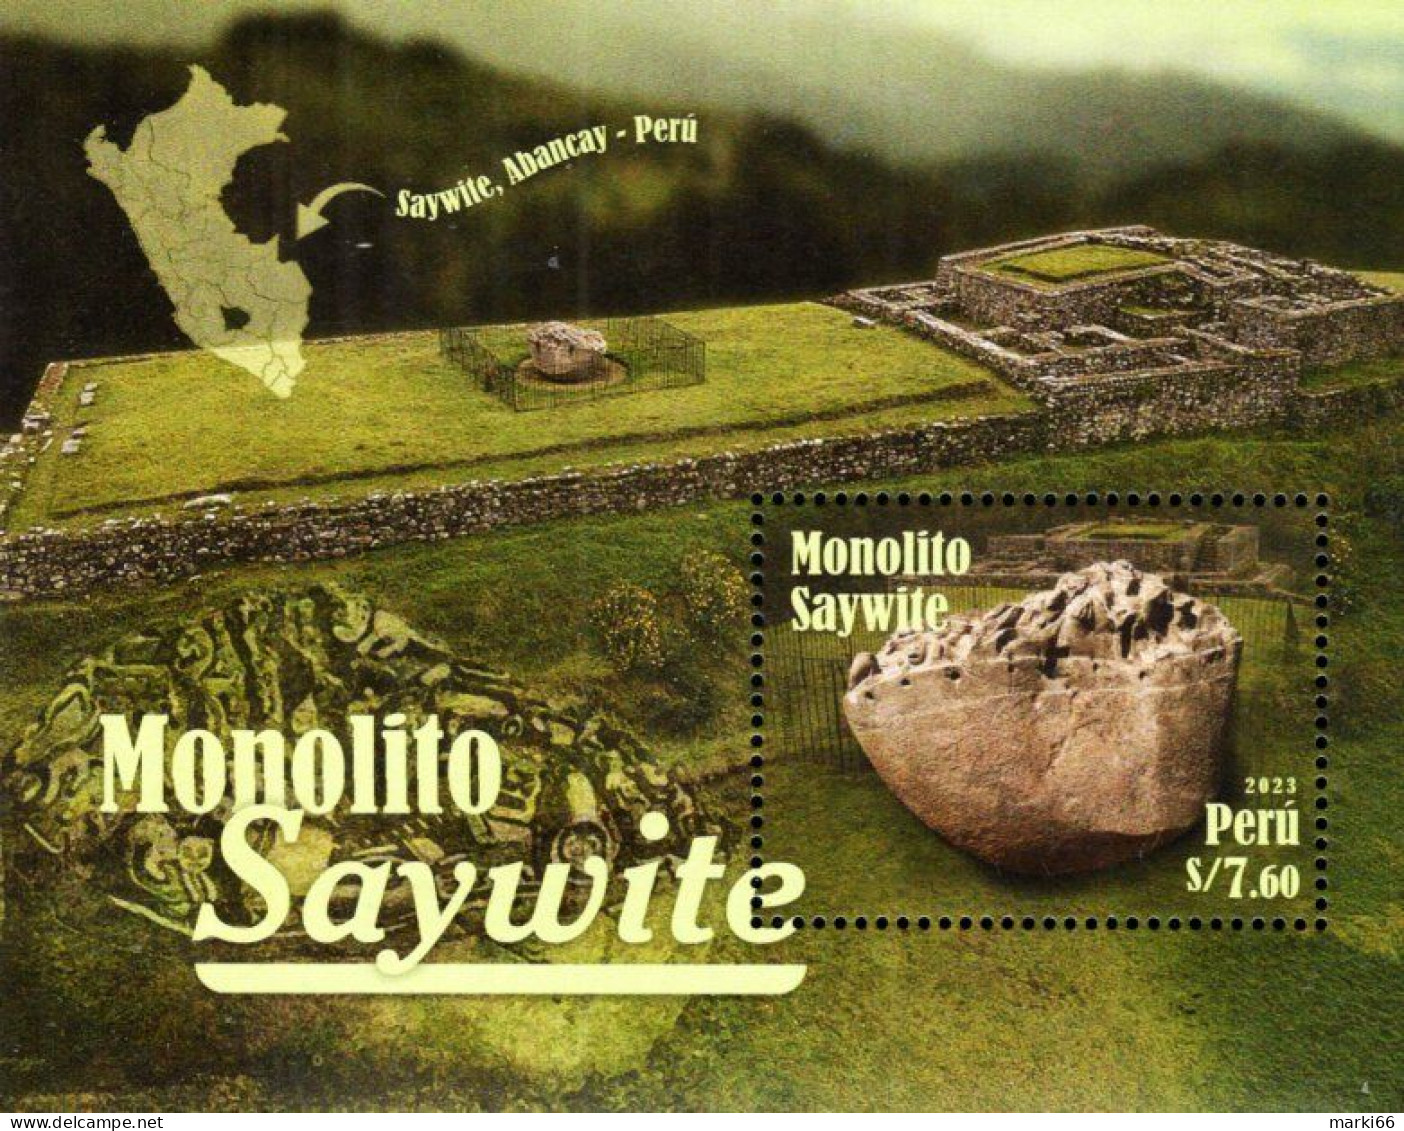 Peru - 2023 - Saywite (Sayhuite) Monolith - Inca Religious Worship Site - Mint Souvenir Sheet - Peru